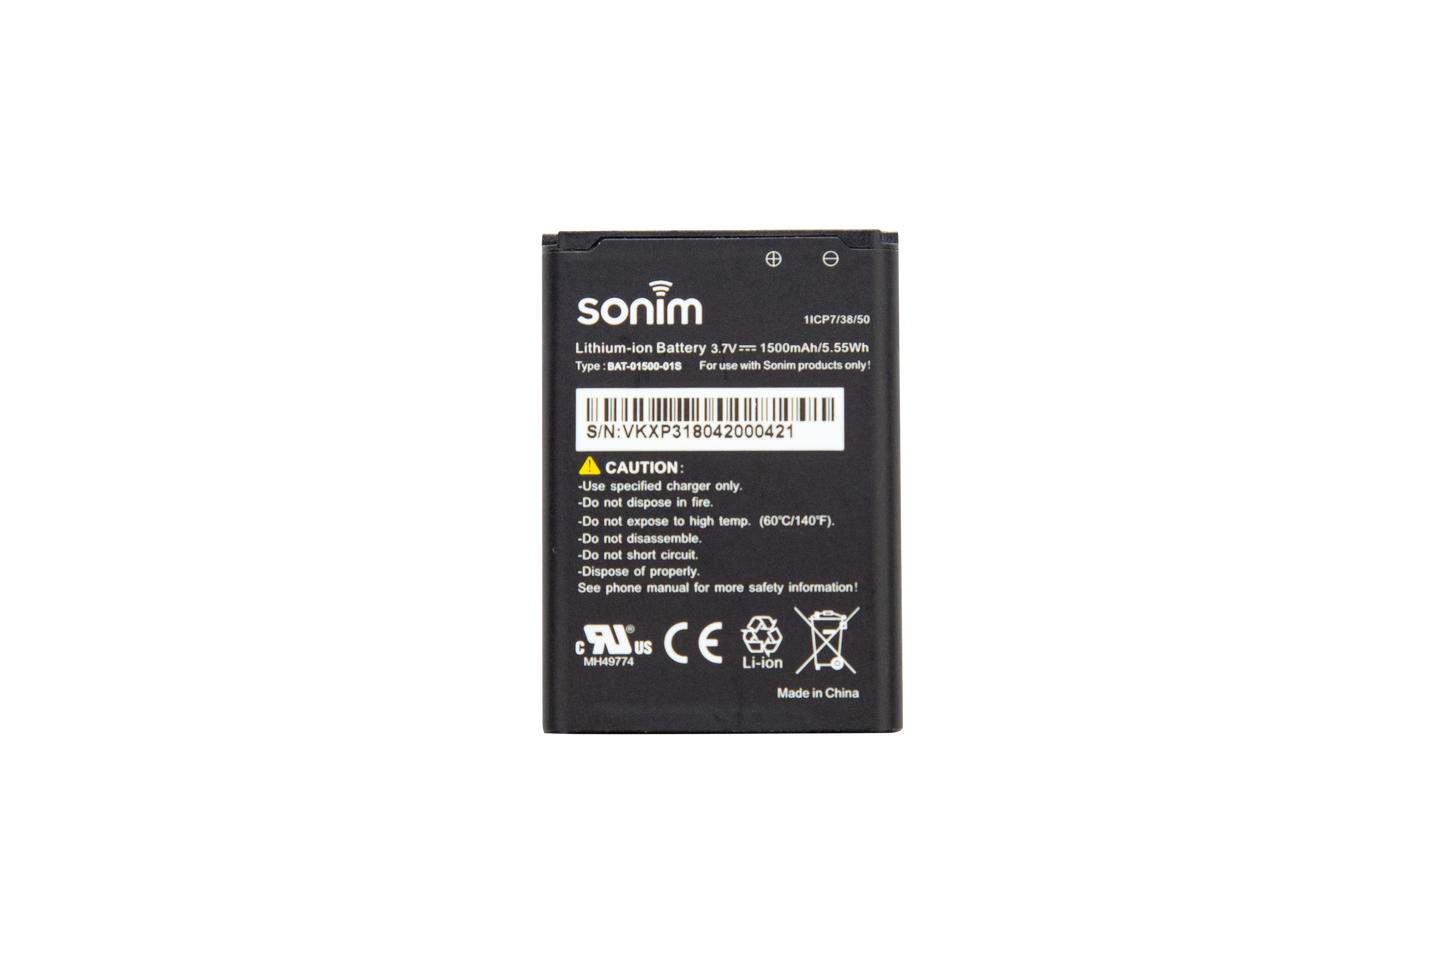 Sonim 1500mAh Li-ion Battery for XP3